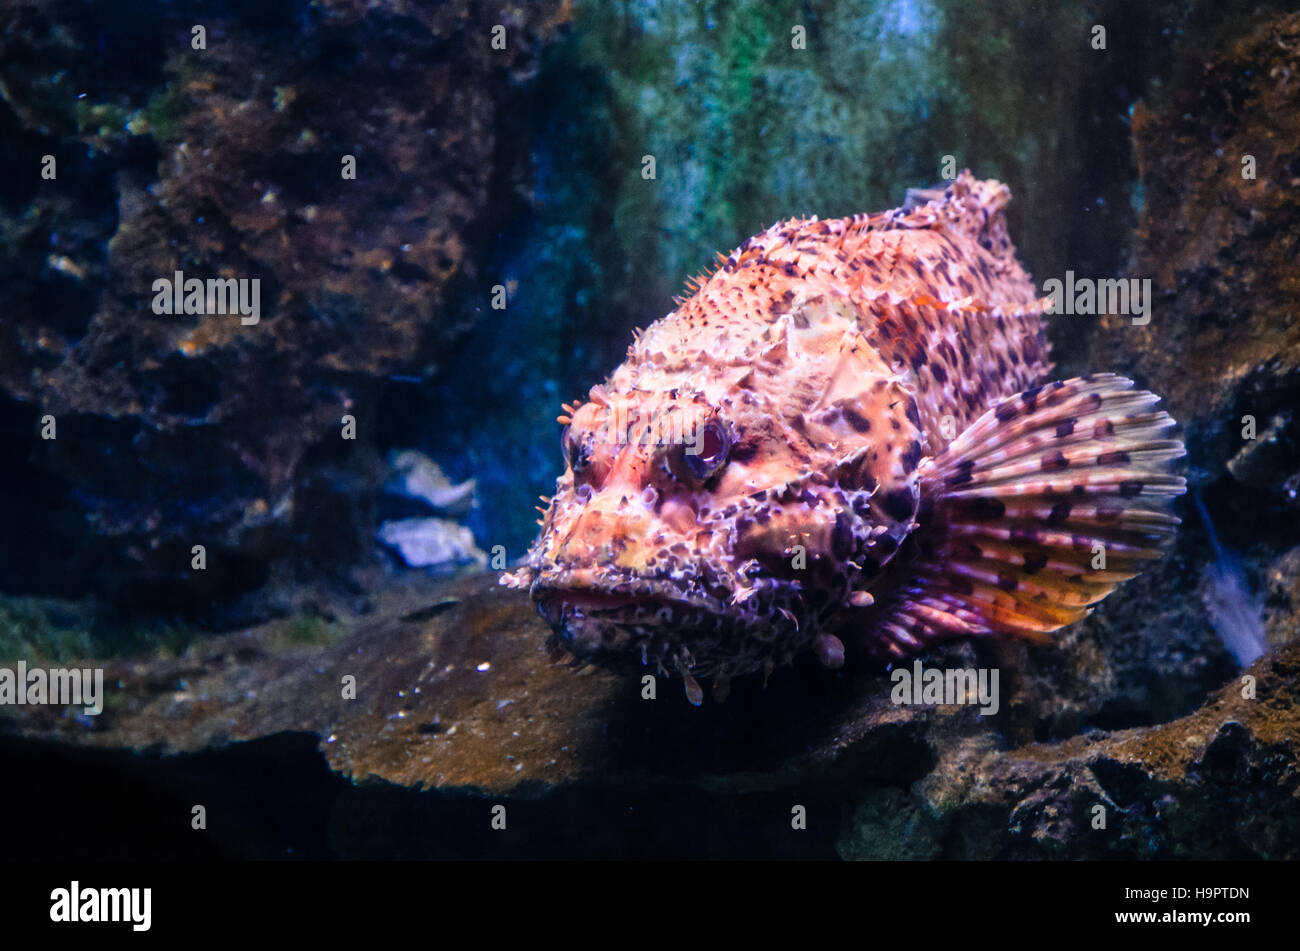 red hidfish in the watertank Stock Photo